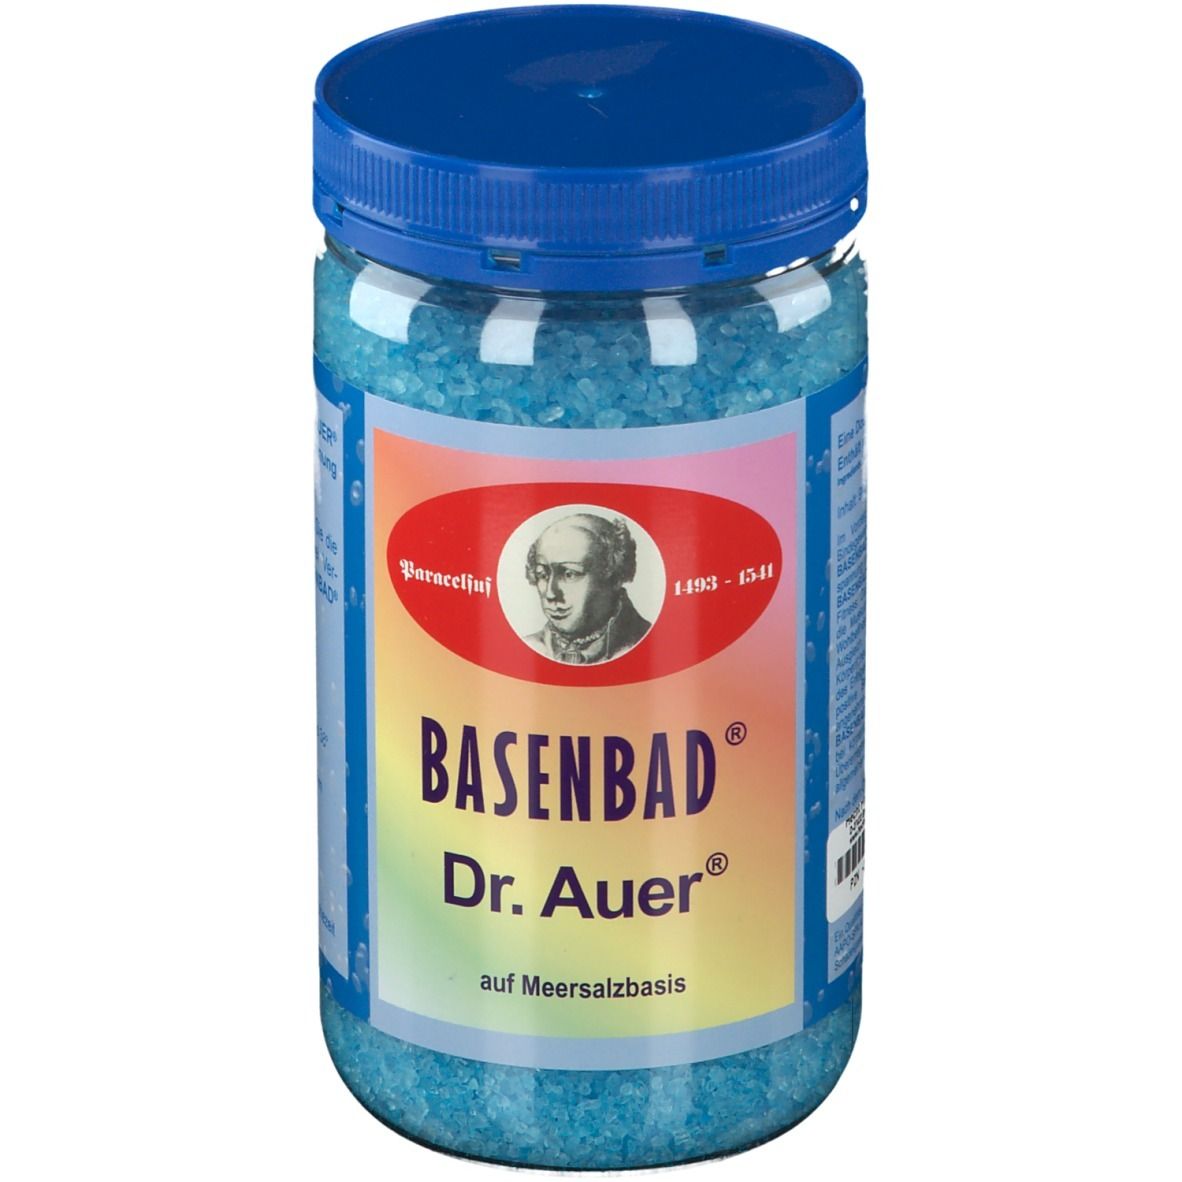 Basenbad nach Dr. Auer®